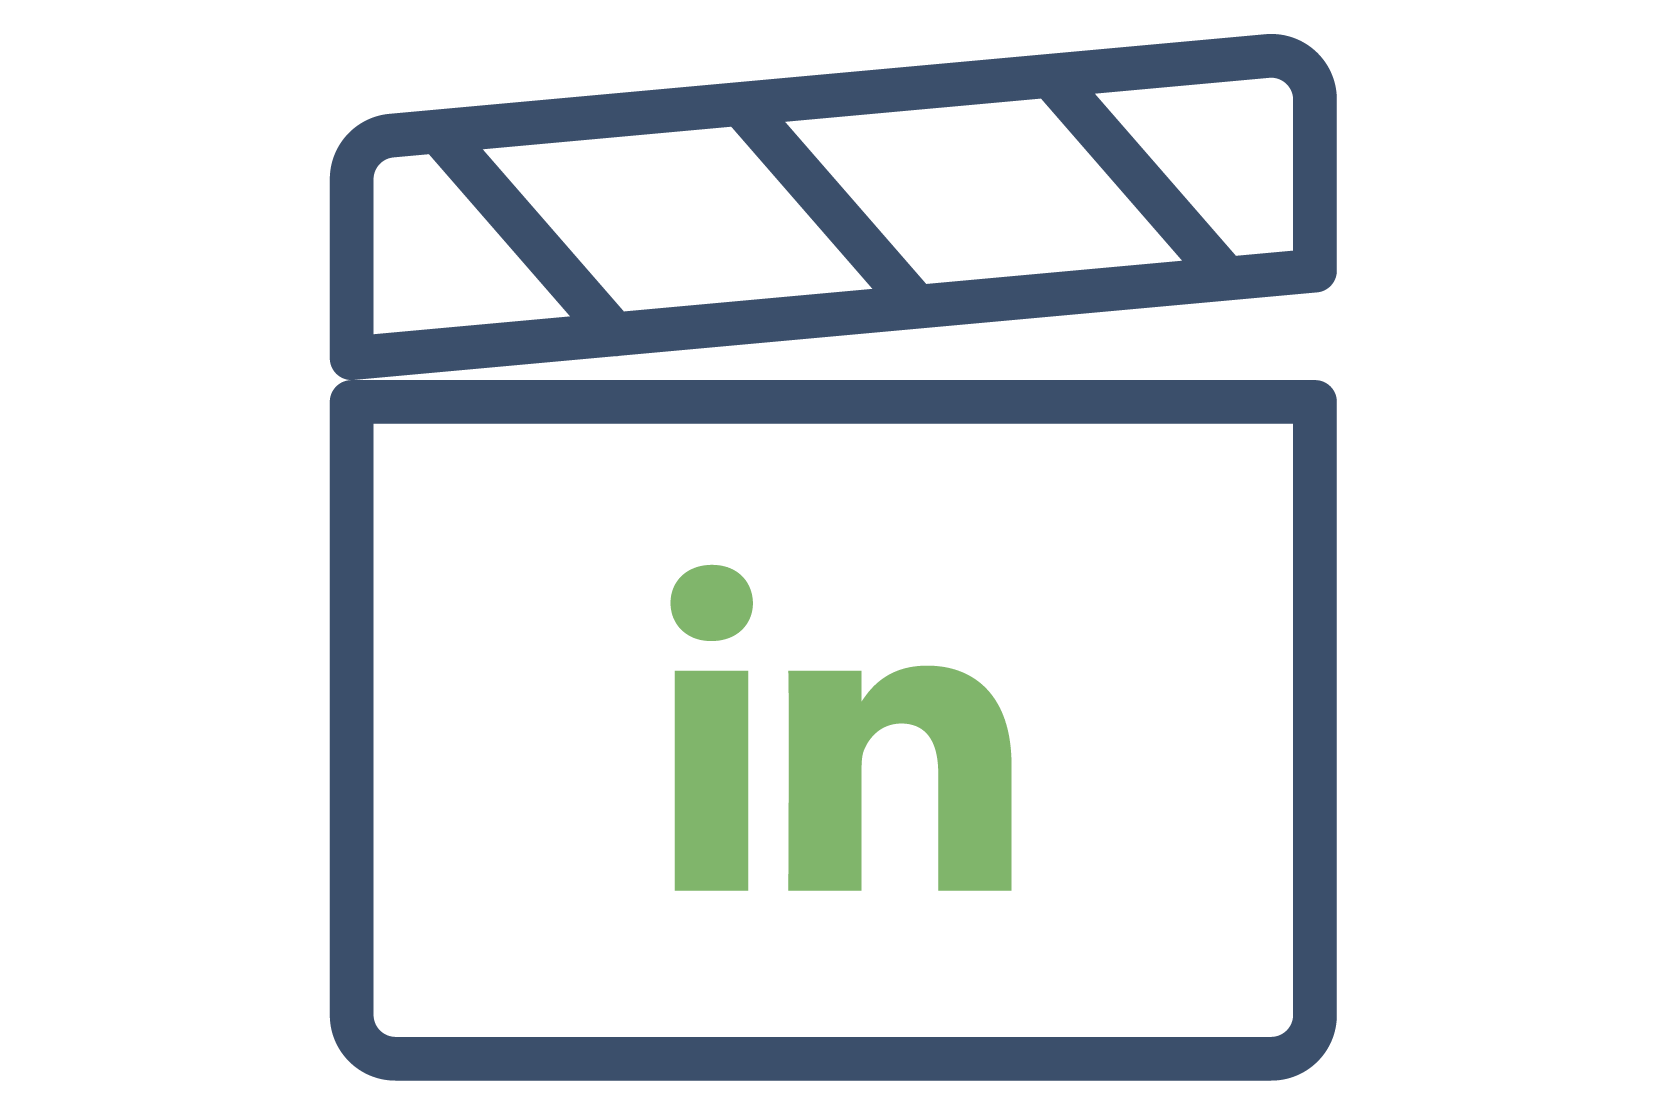 movie clapper icon with linkedin logo in center